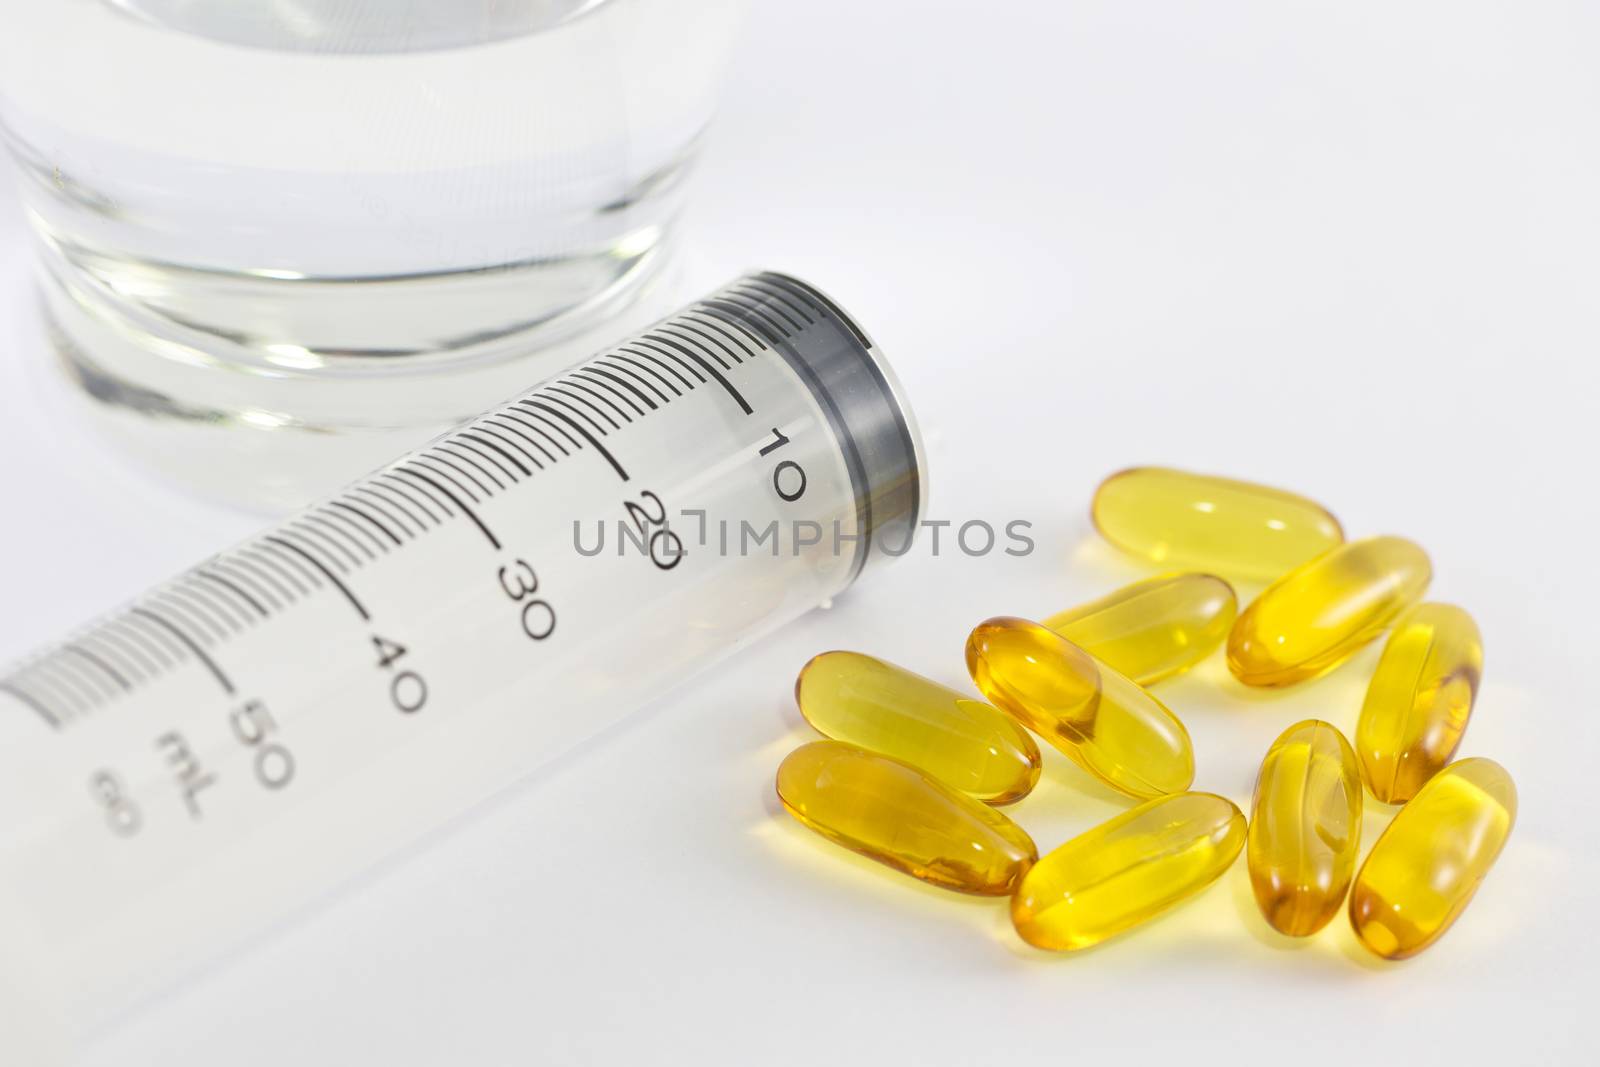 Vitamin capsules by jayzynism